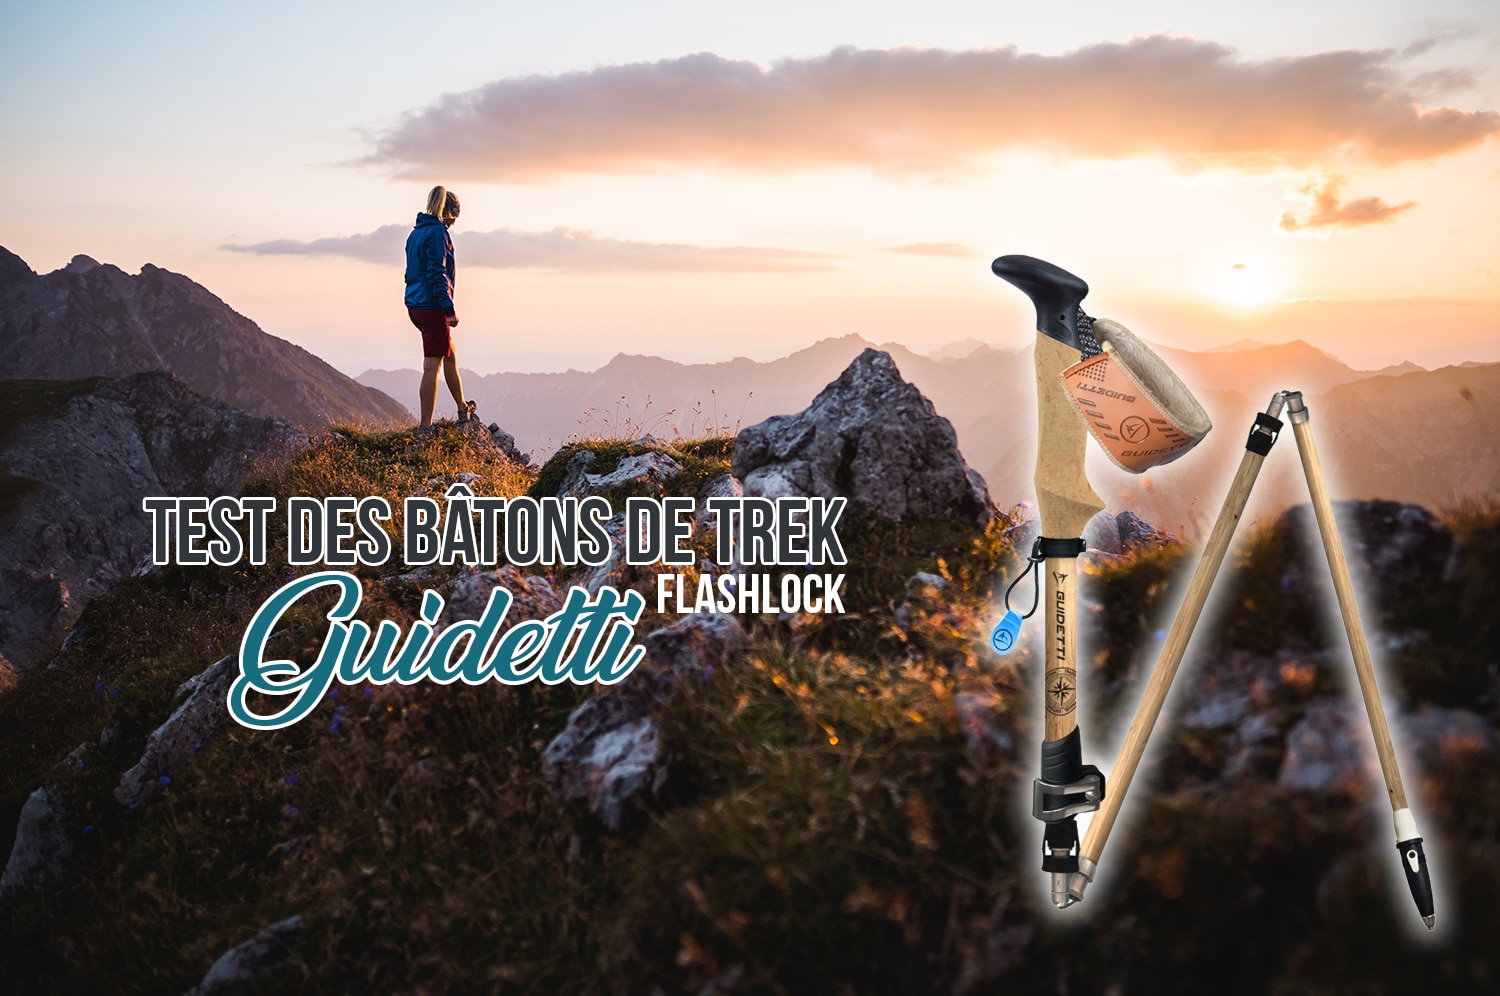 You are currently viewing Test des bâtons de trek Guidetti Flashlock